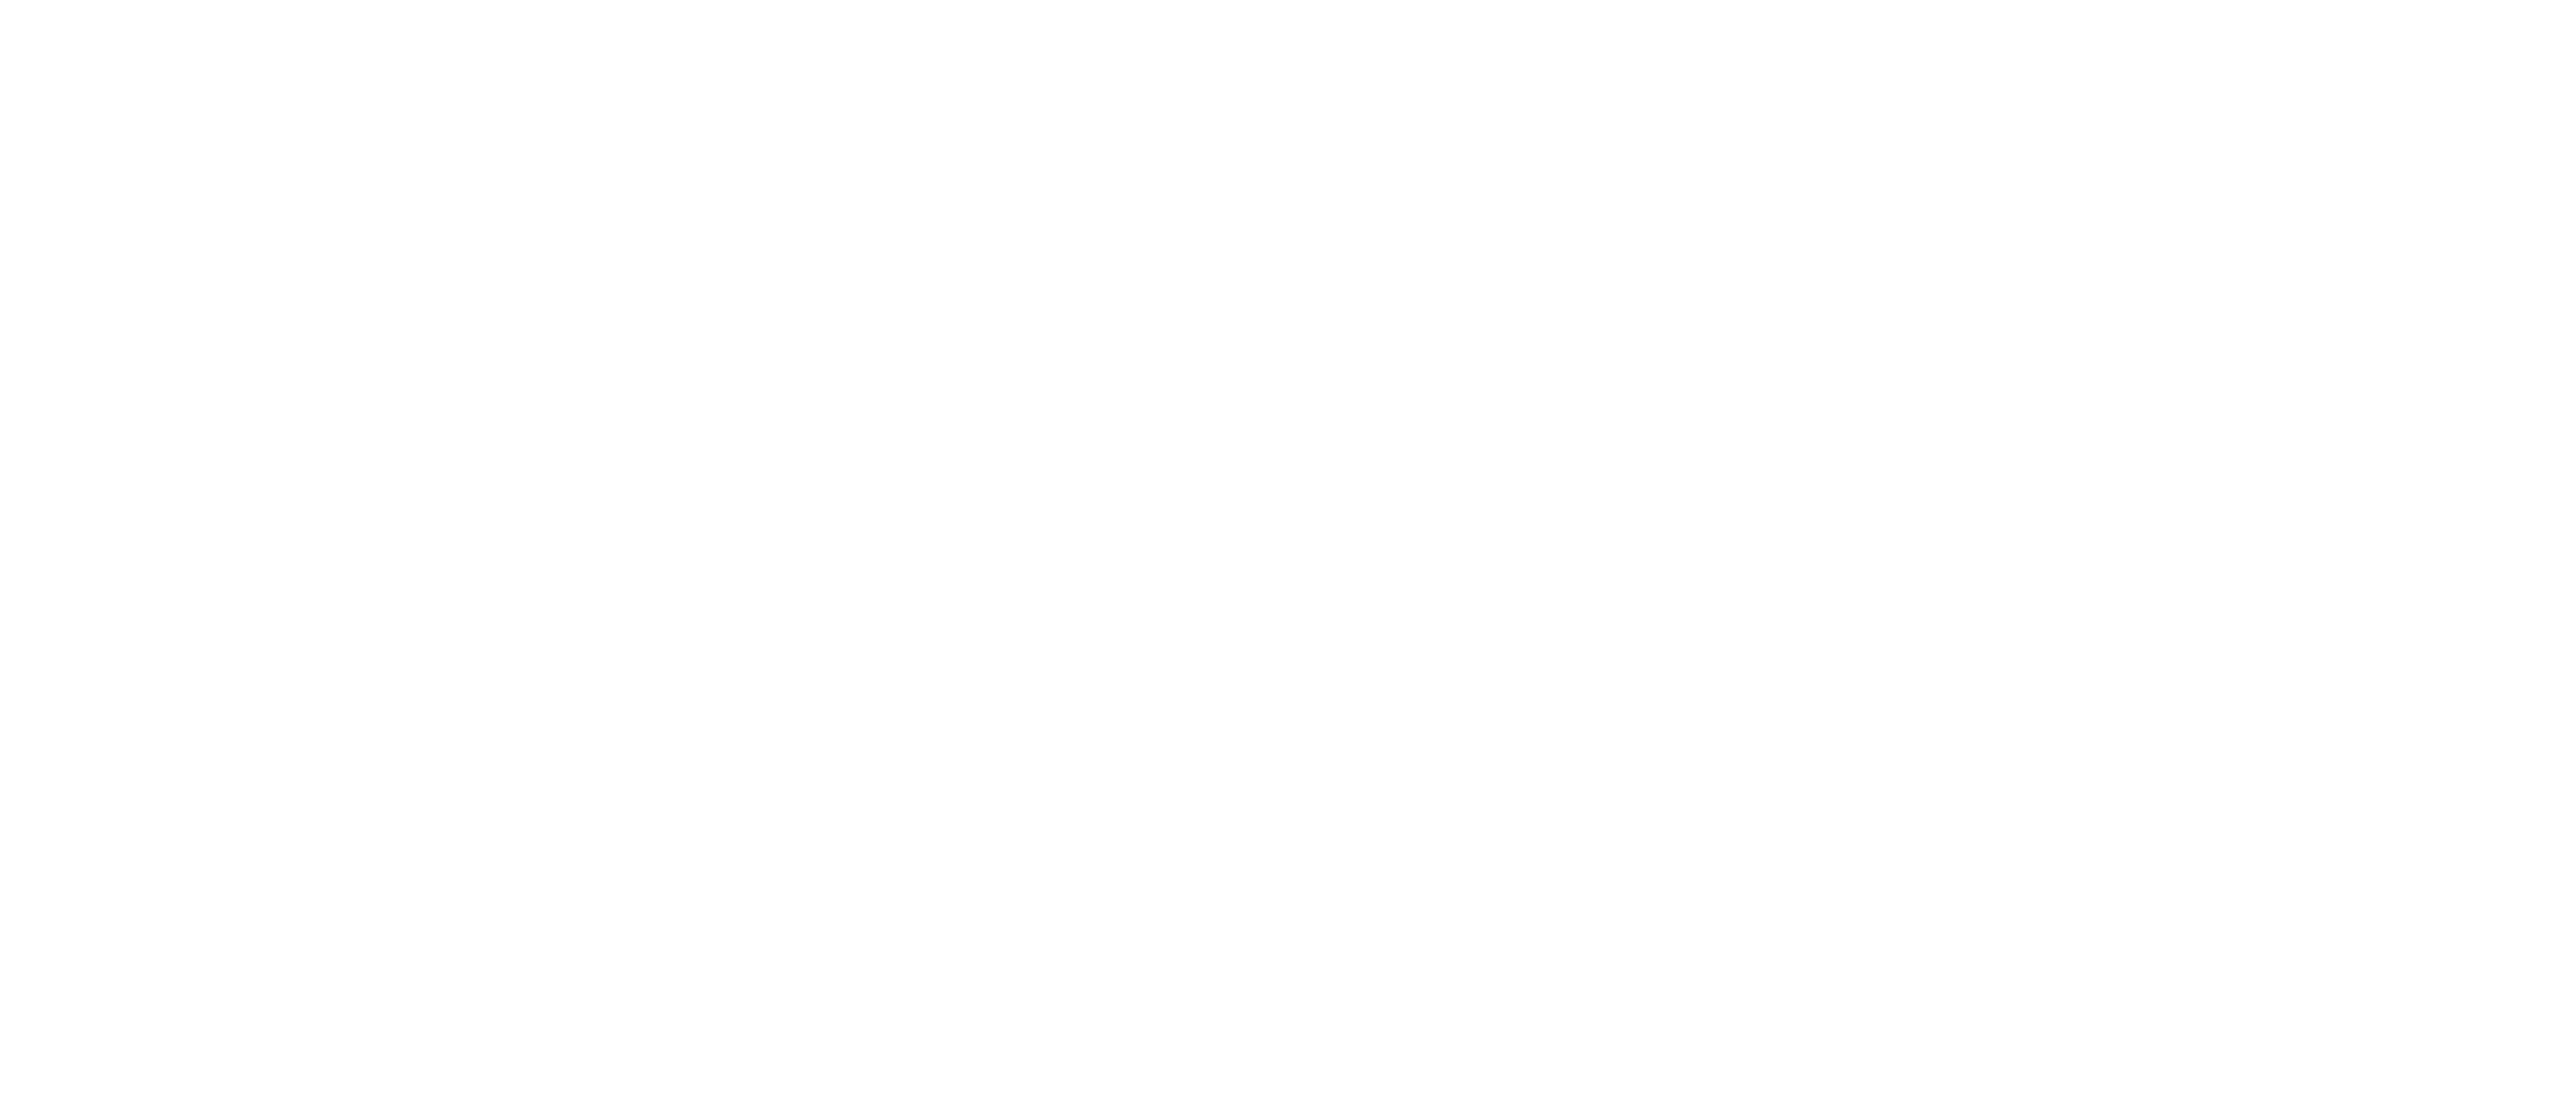 Phoenix Tax Guy Logo White